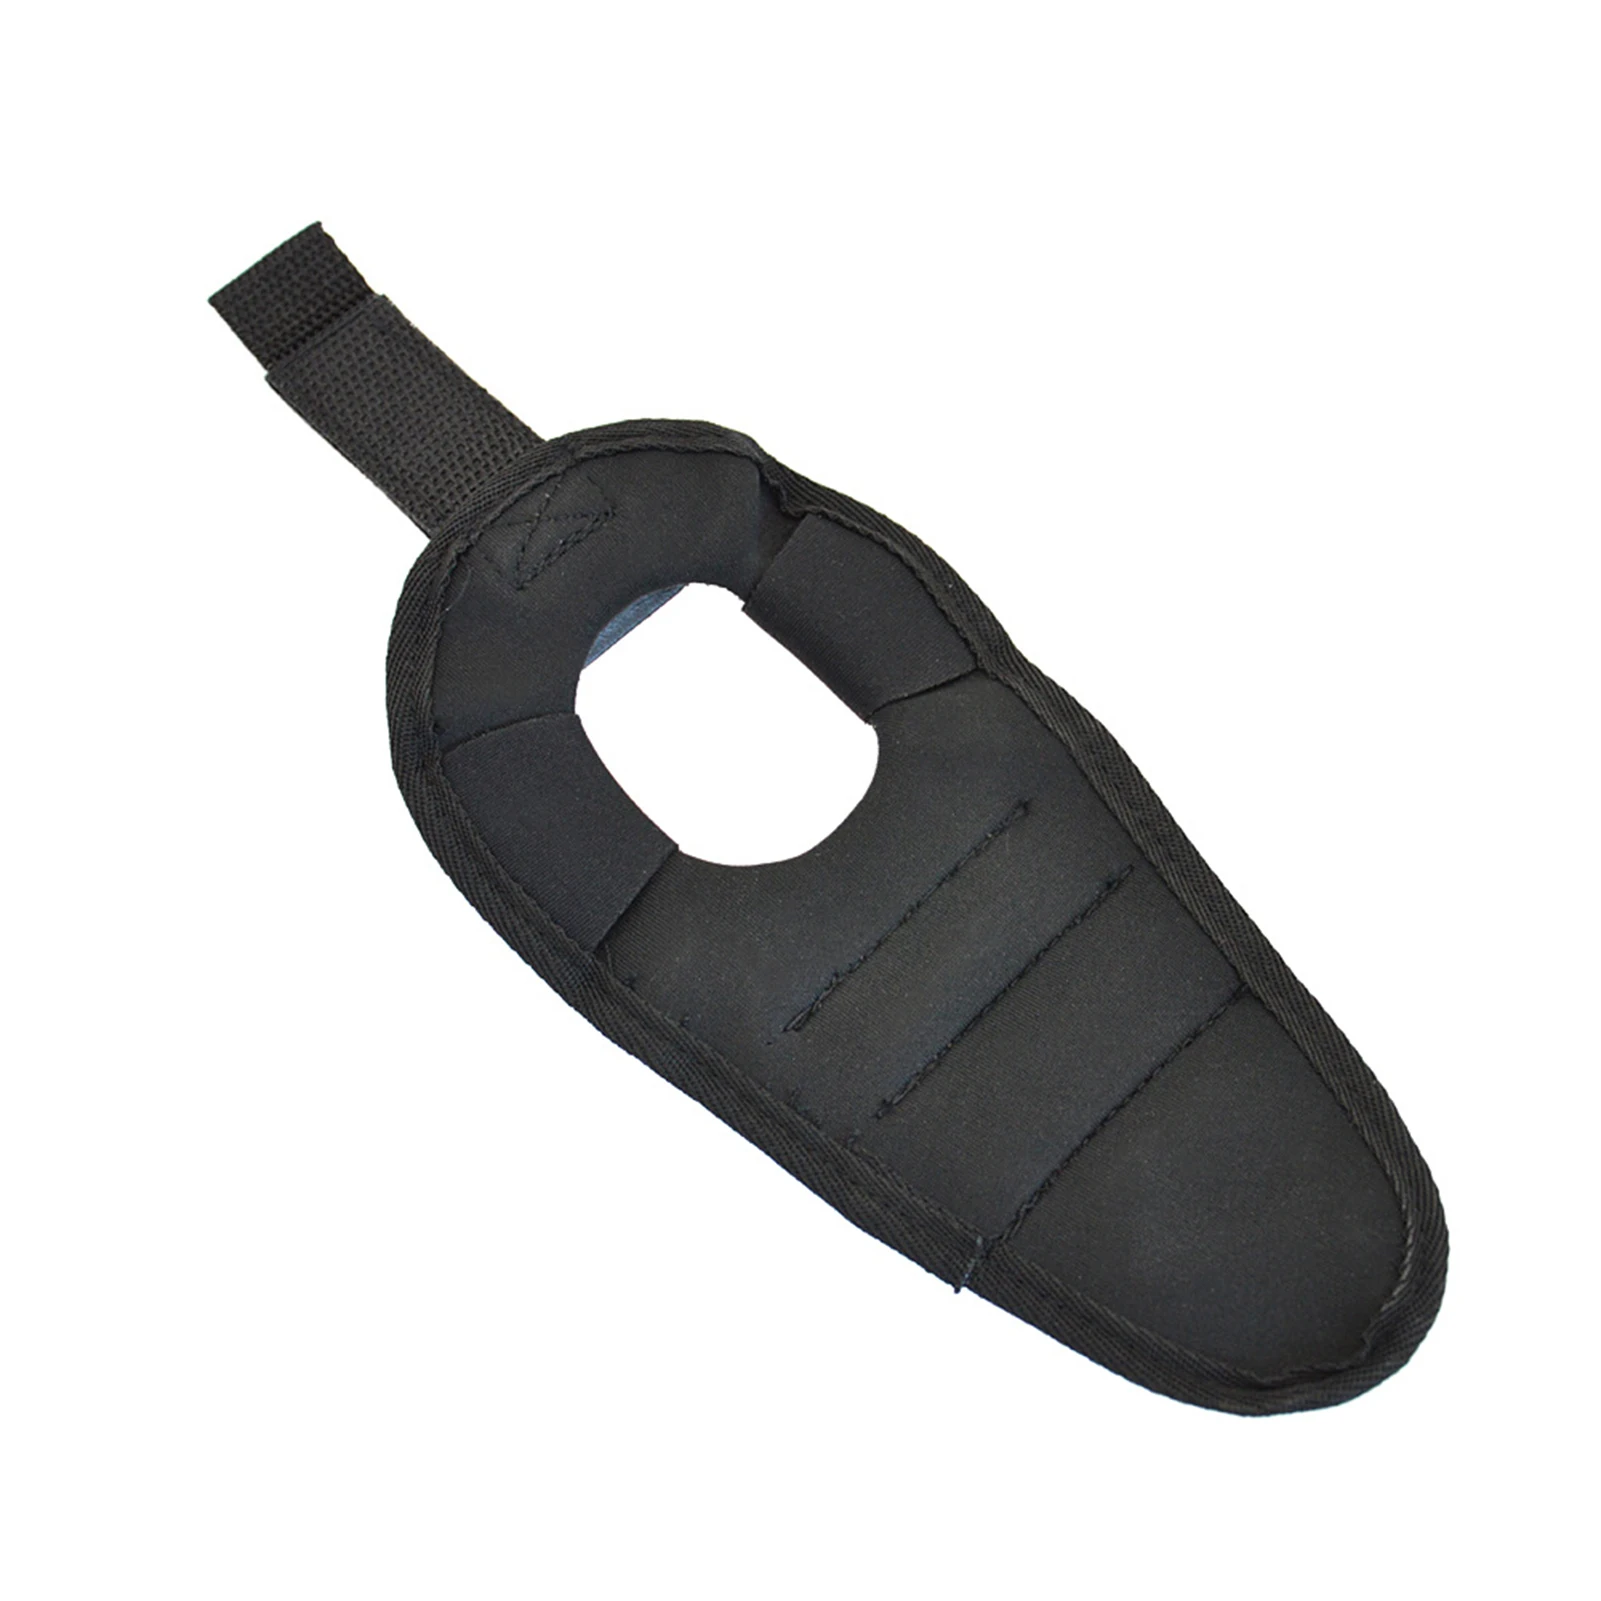 

Adjustable Scuba Diving Wrist Strap Hands-Free Submarine Flashlight Holder Glove Suitable for Underwater Camping EIG88